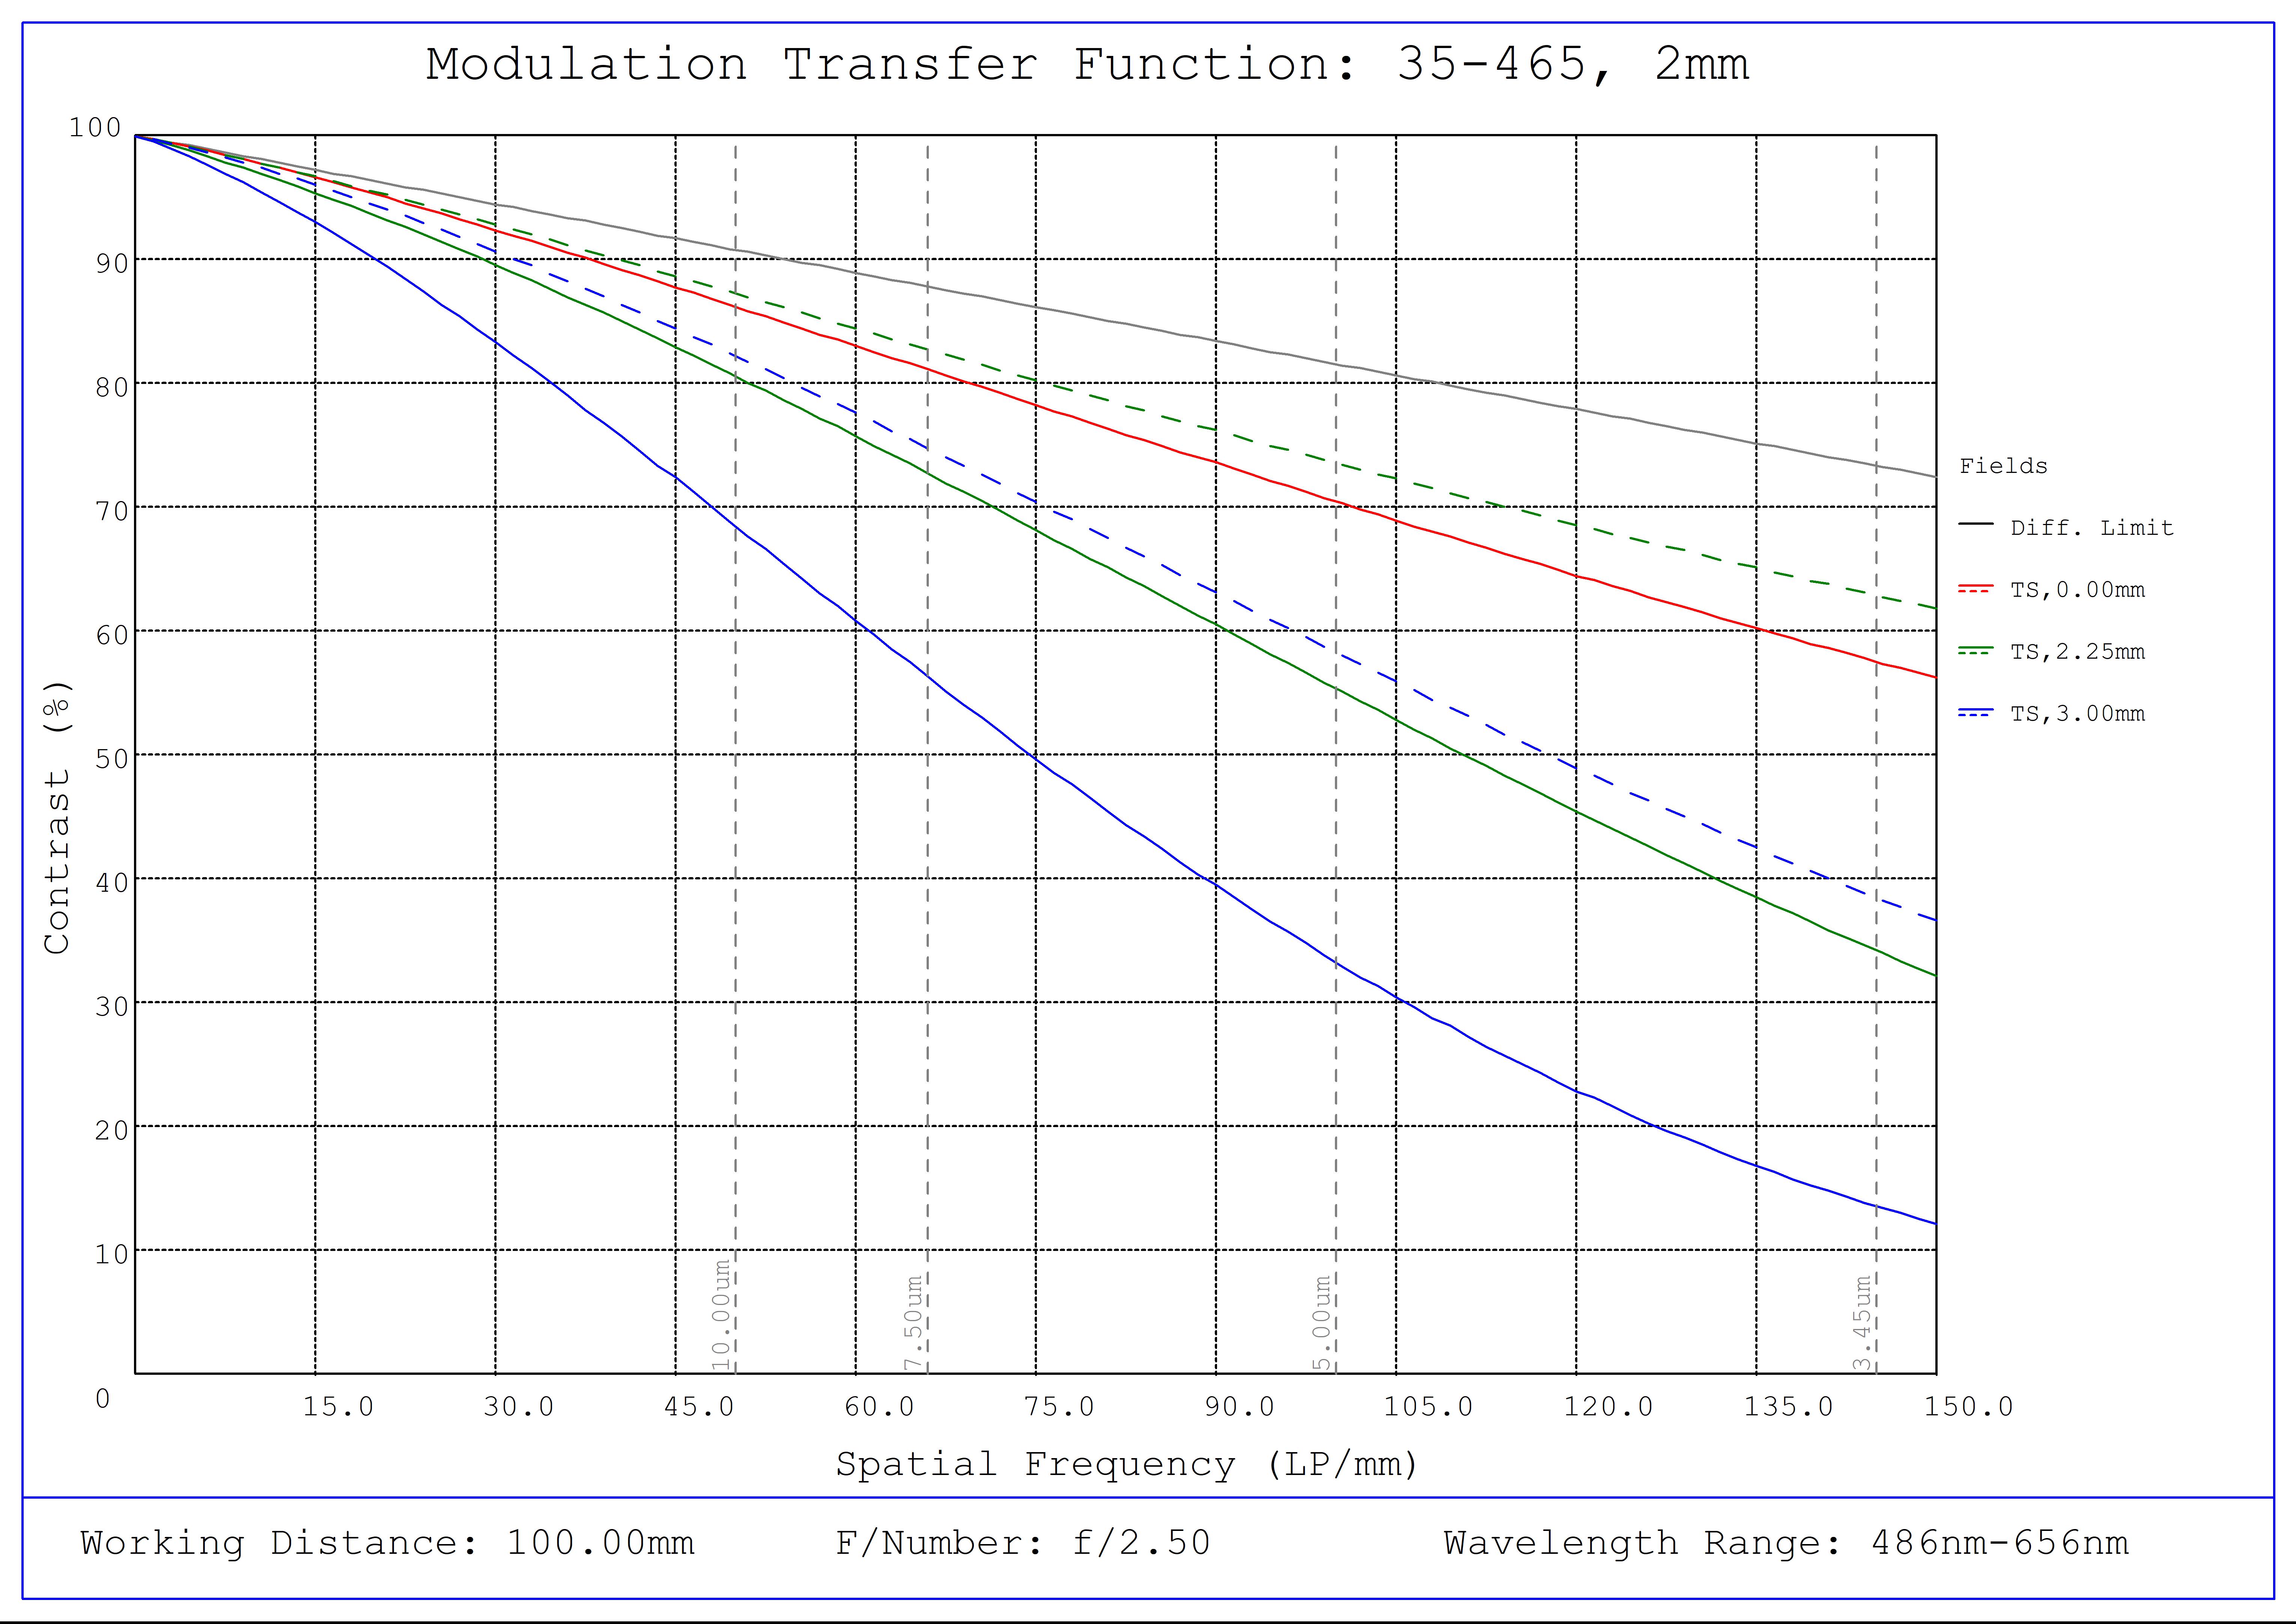 #35-465, 2mm FL f/2.5 IR-Cut, Blue Series M12 Lens, Modulated Transfer Function (MTF) Plot, 100mm Working Distance, f2.5